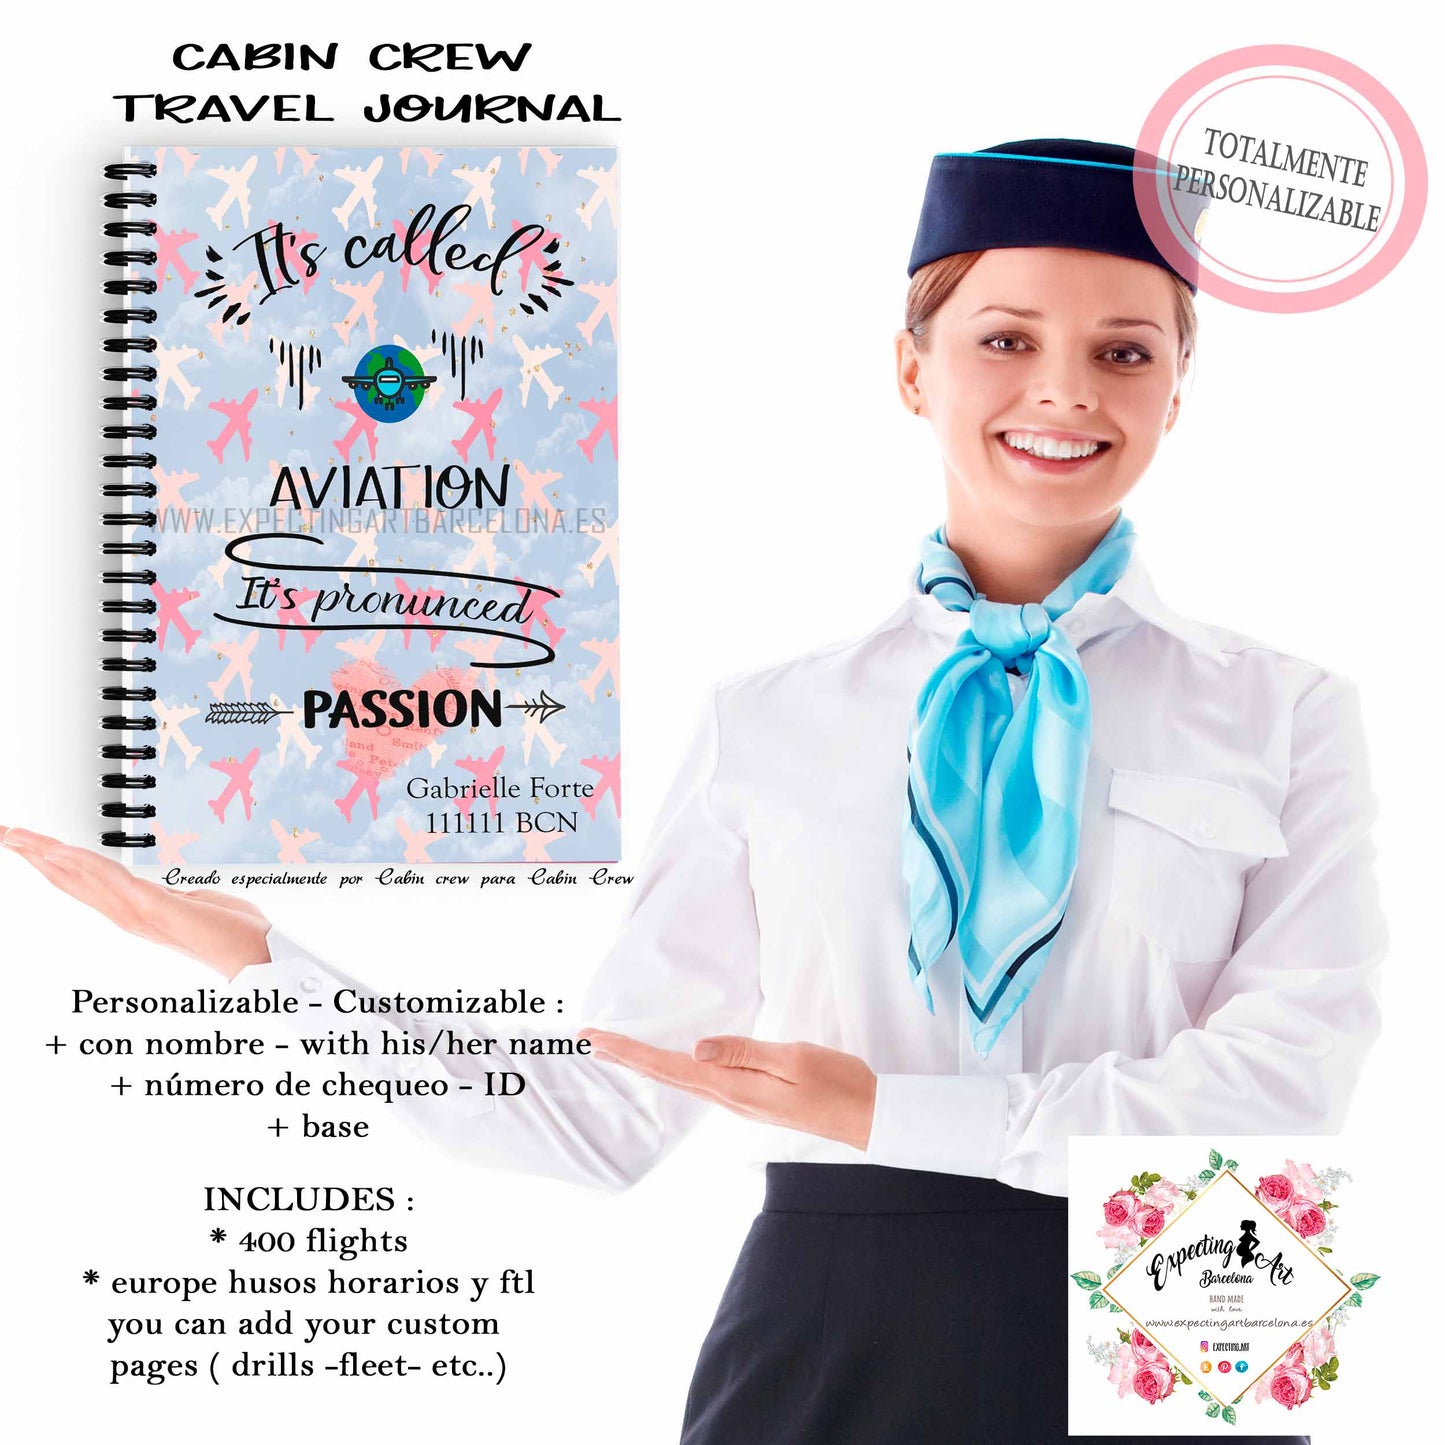 Agenda de vuelo para cabin crew personalizable. Modelo "Its called aviation..".